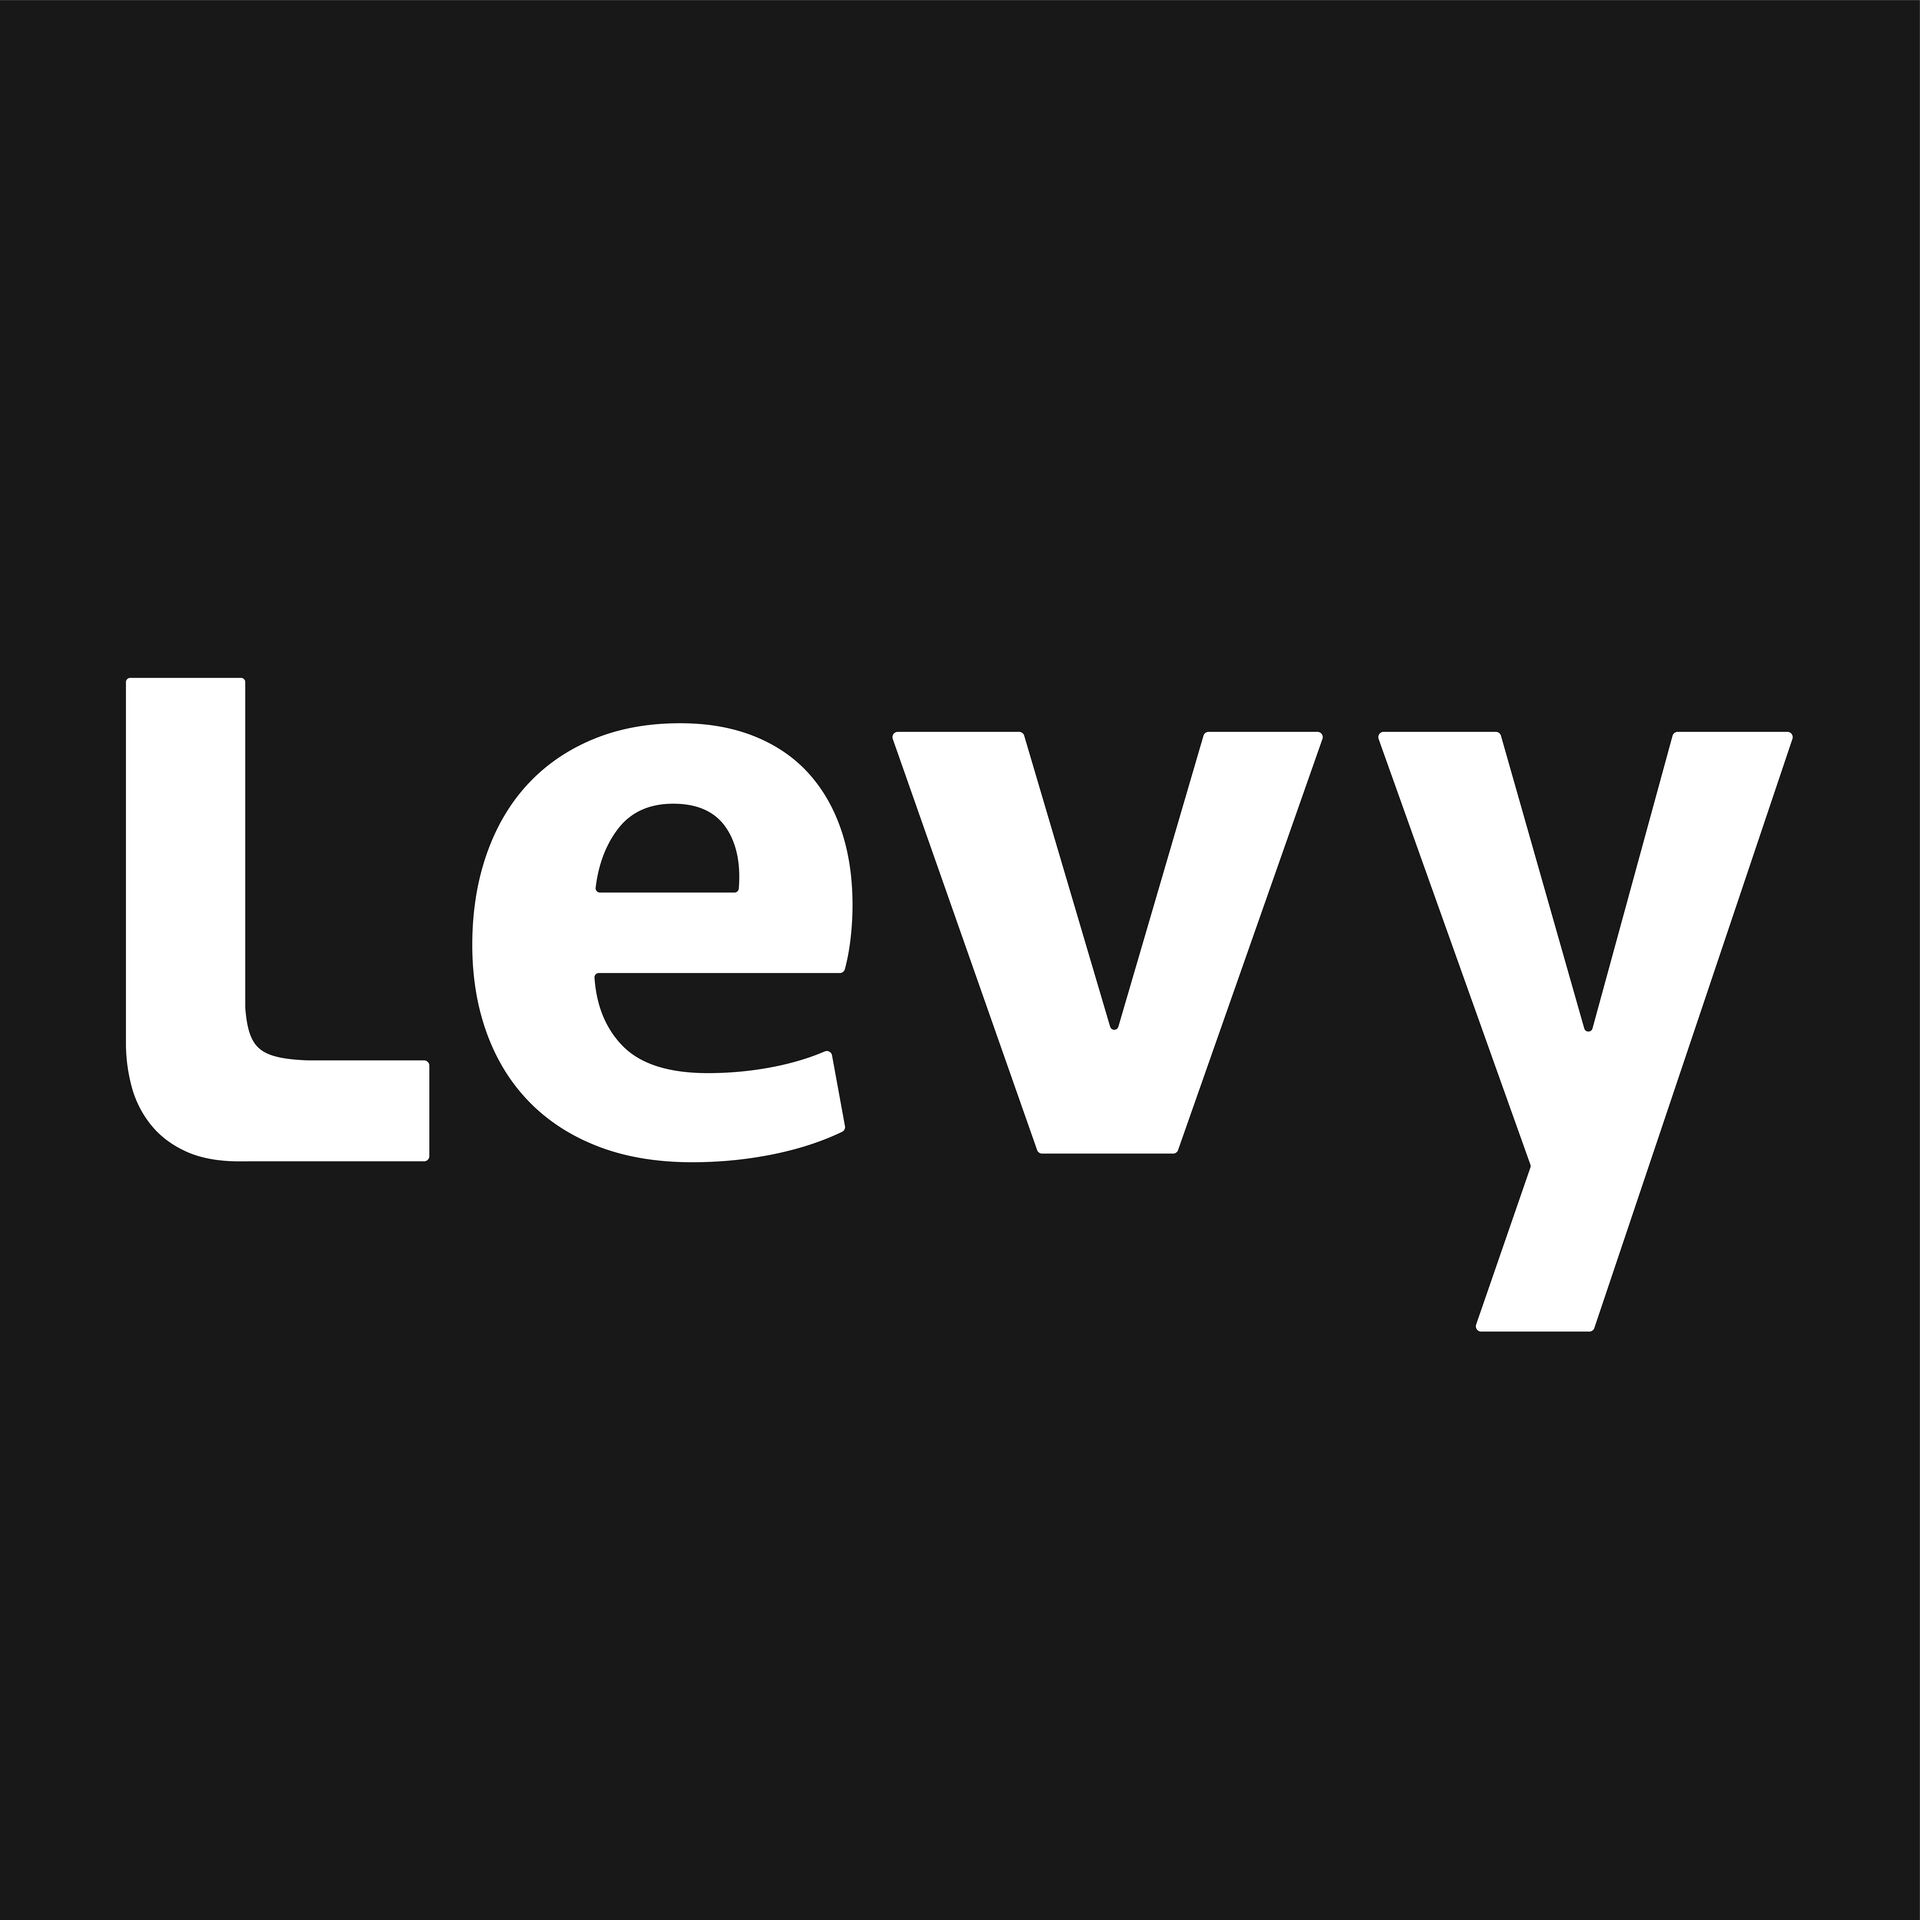 levy_logo